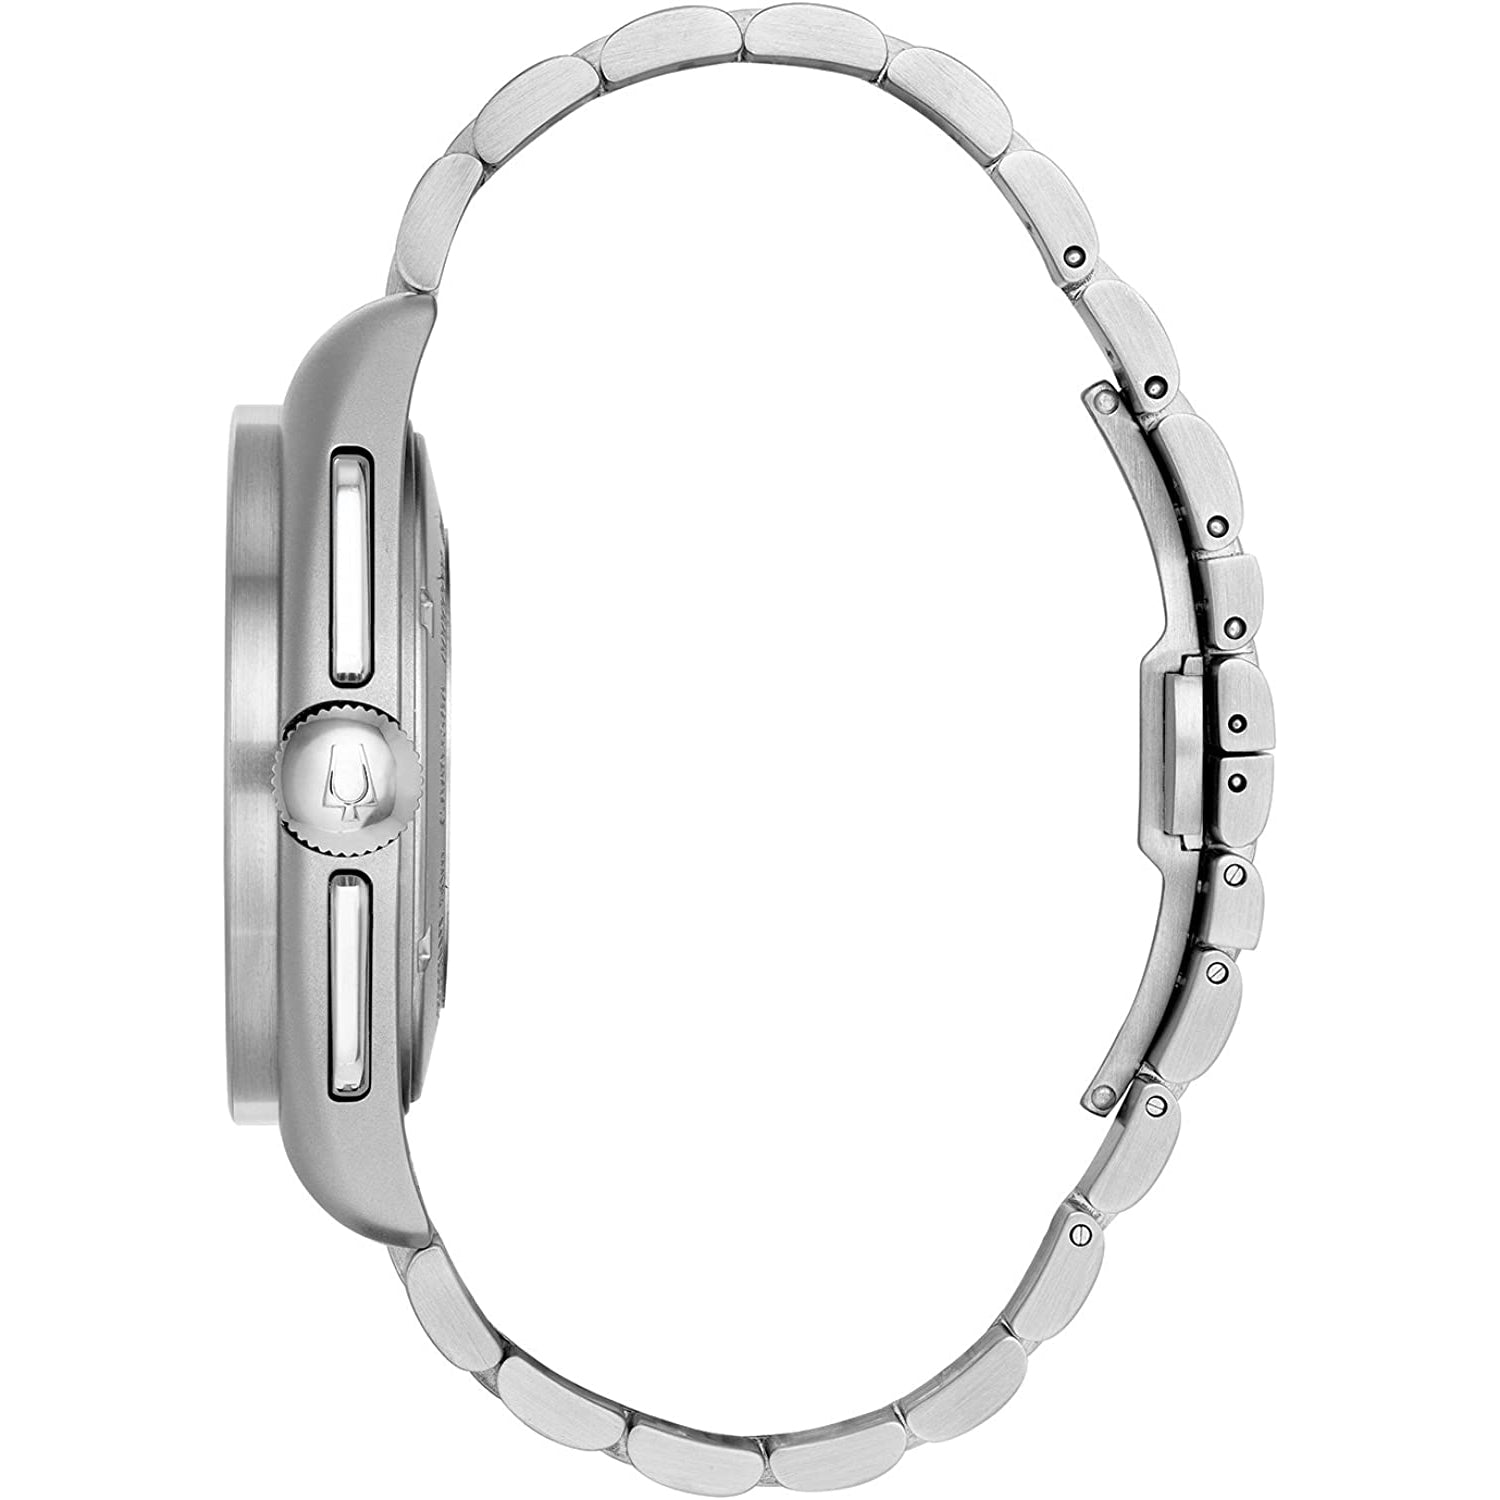 Bulova Men's Designer Chronograph Lunar Watch Stainless With Steel Bracelet 96B258